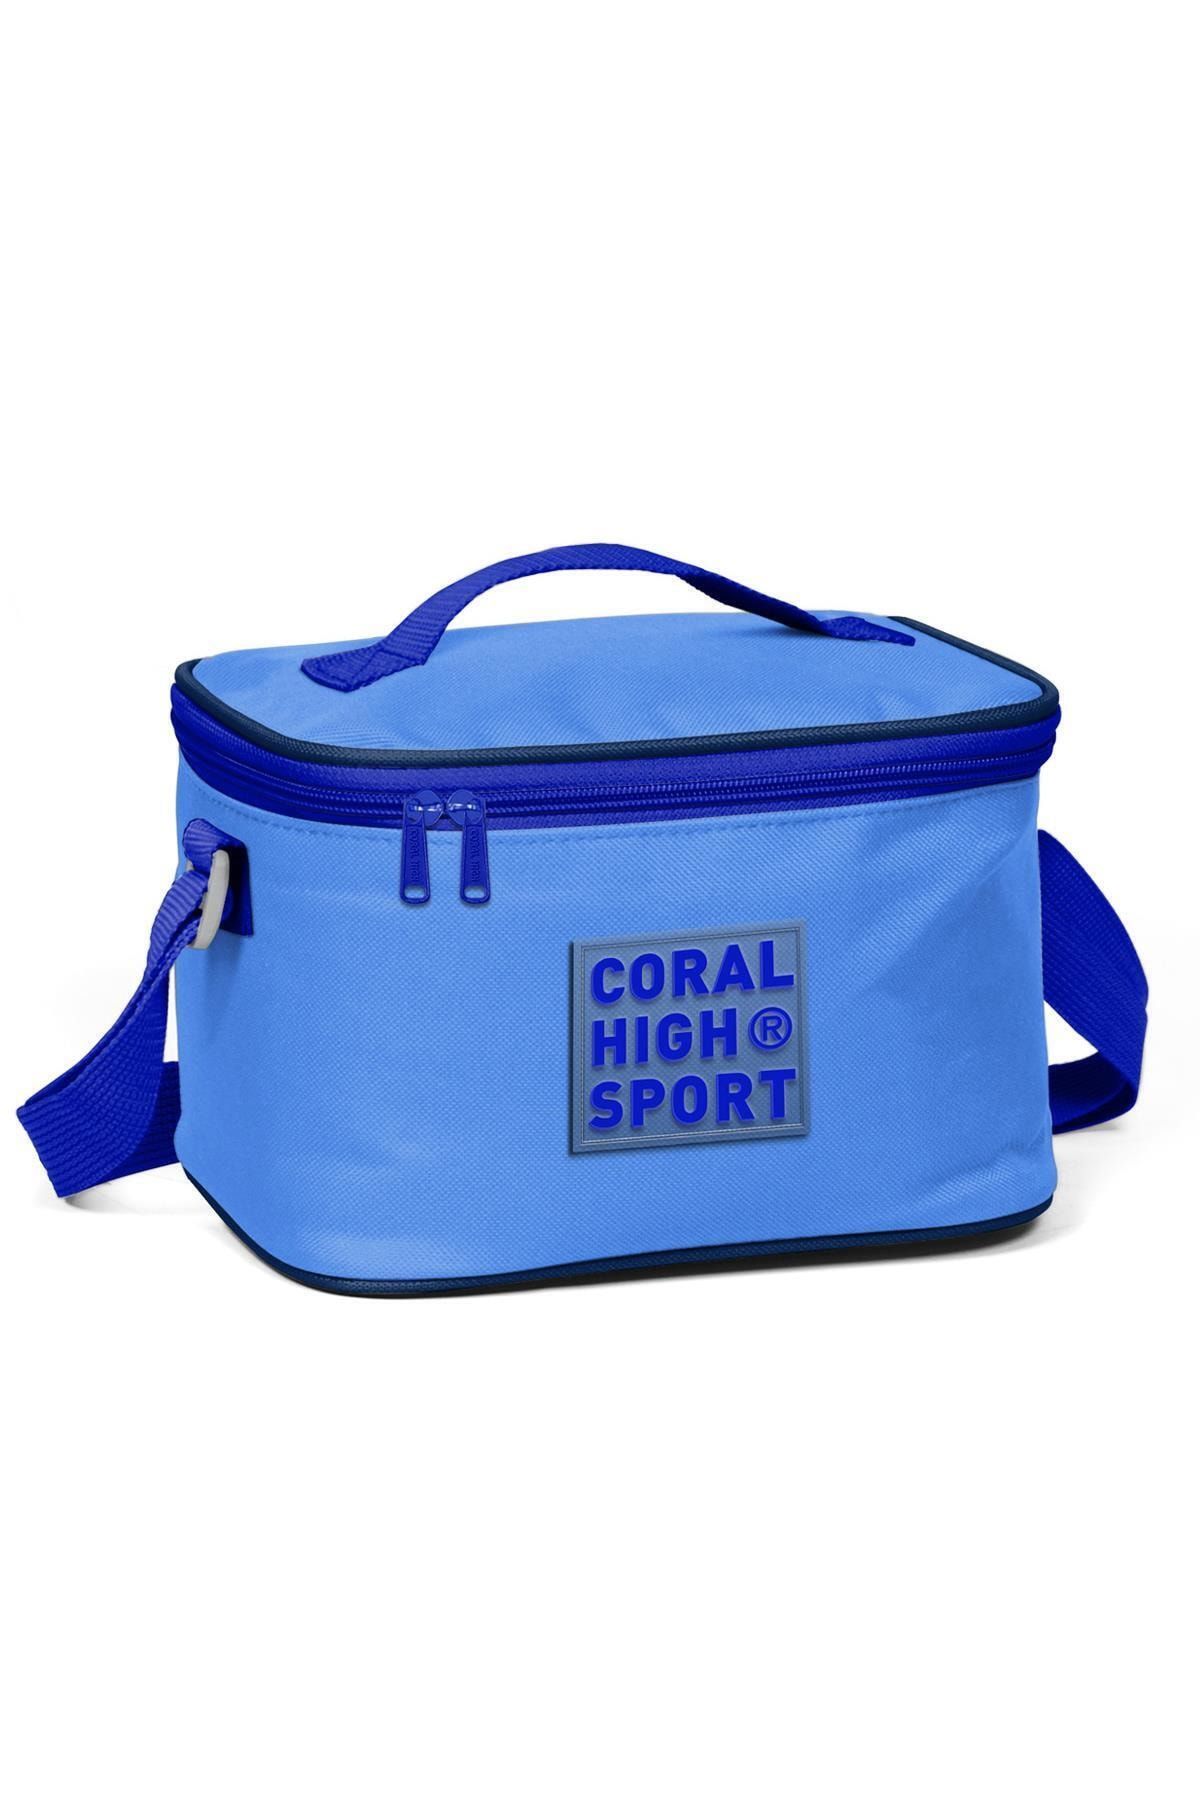 Coral High Sport Derin Mavi Thermo Beslenme Çantası 22803